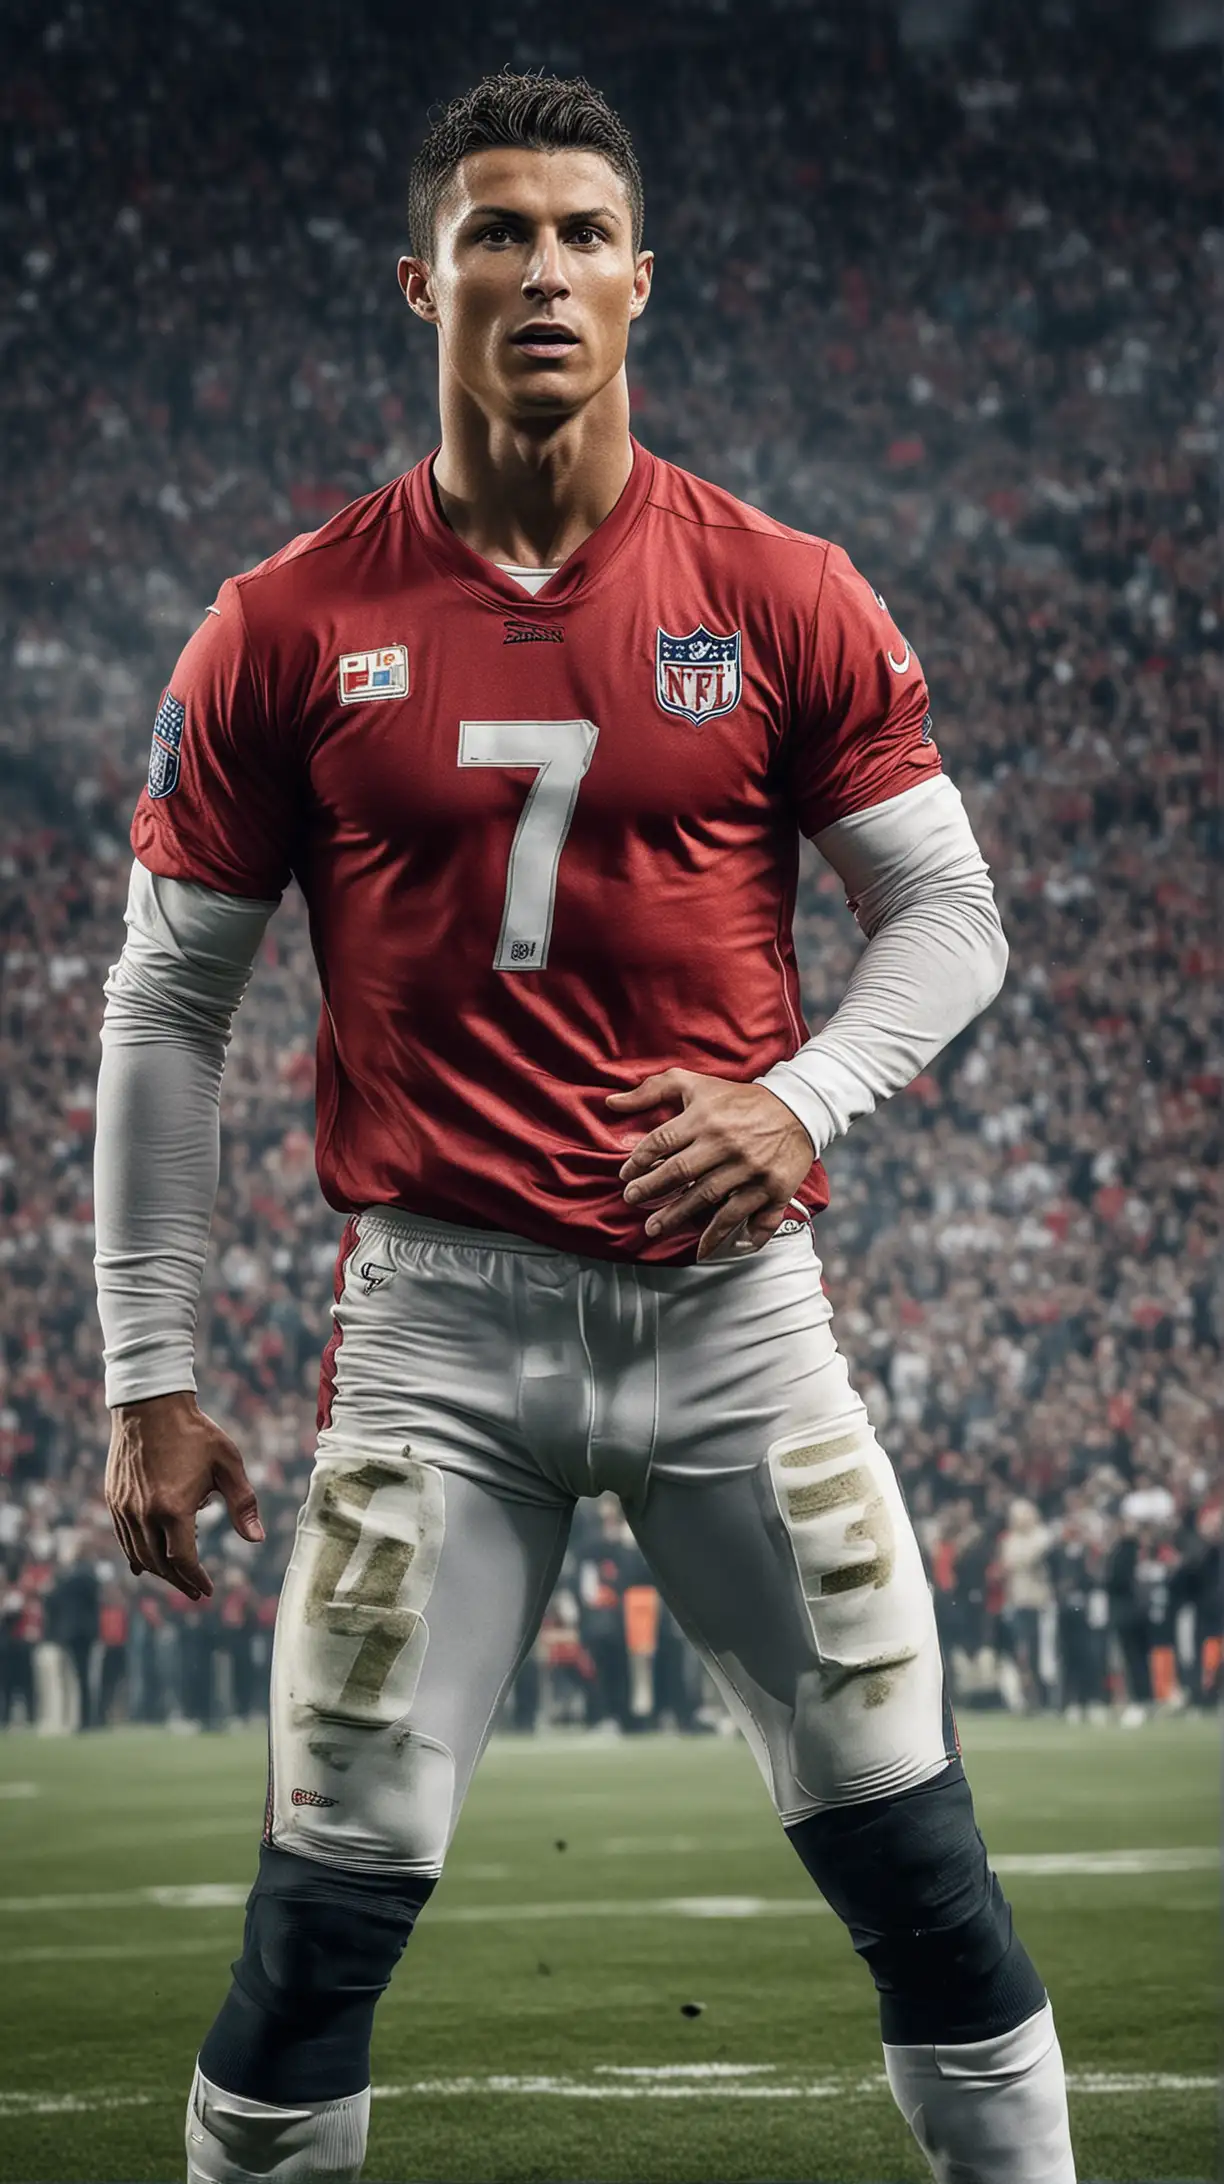 Cristiano Ronaldo as NFL Player HighQuality 4K Portrait